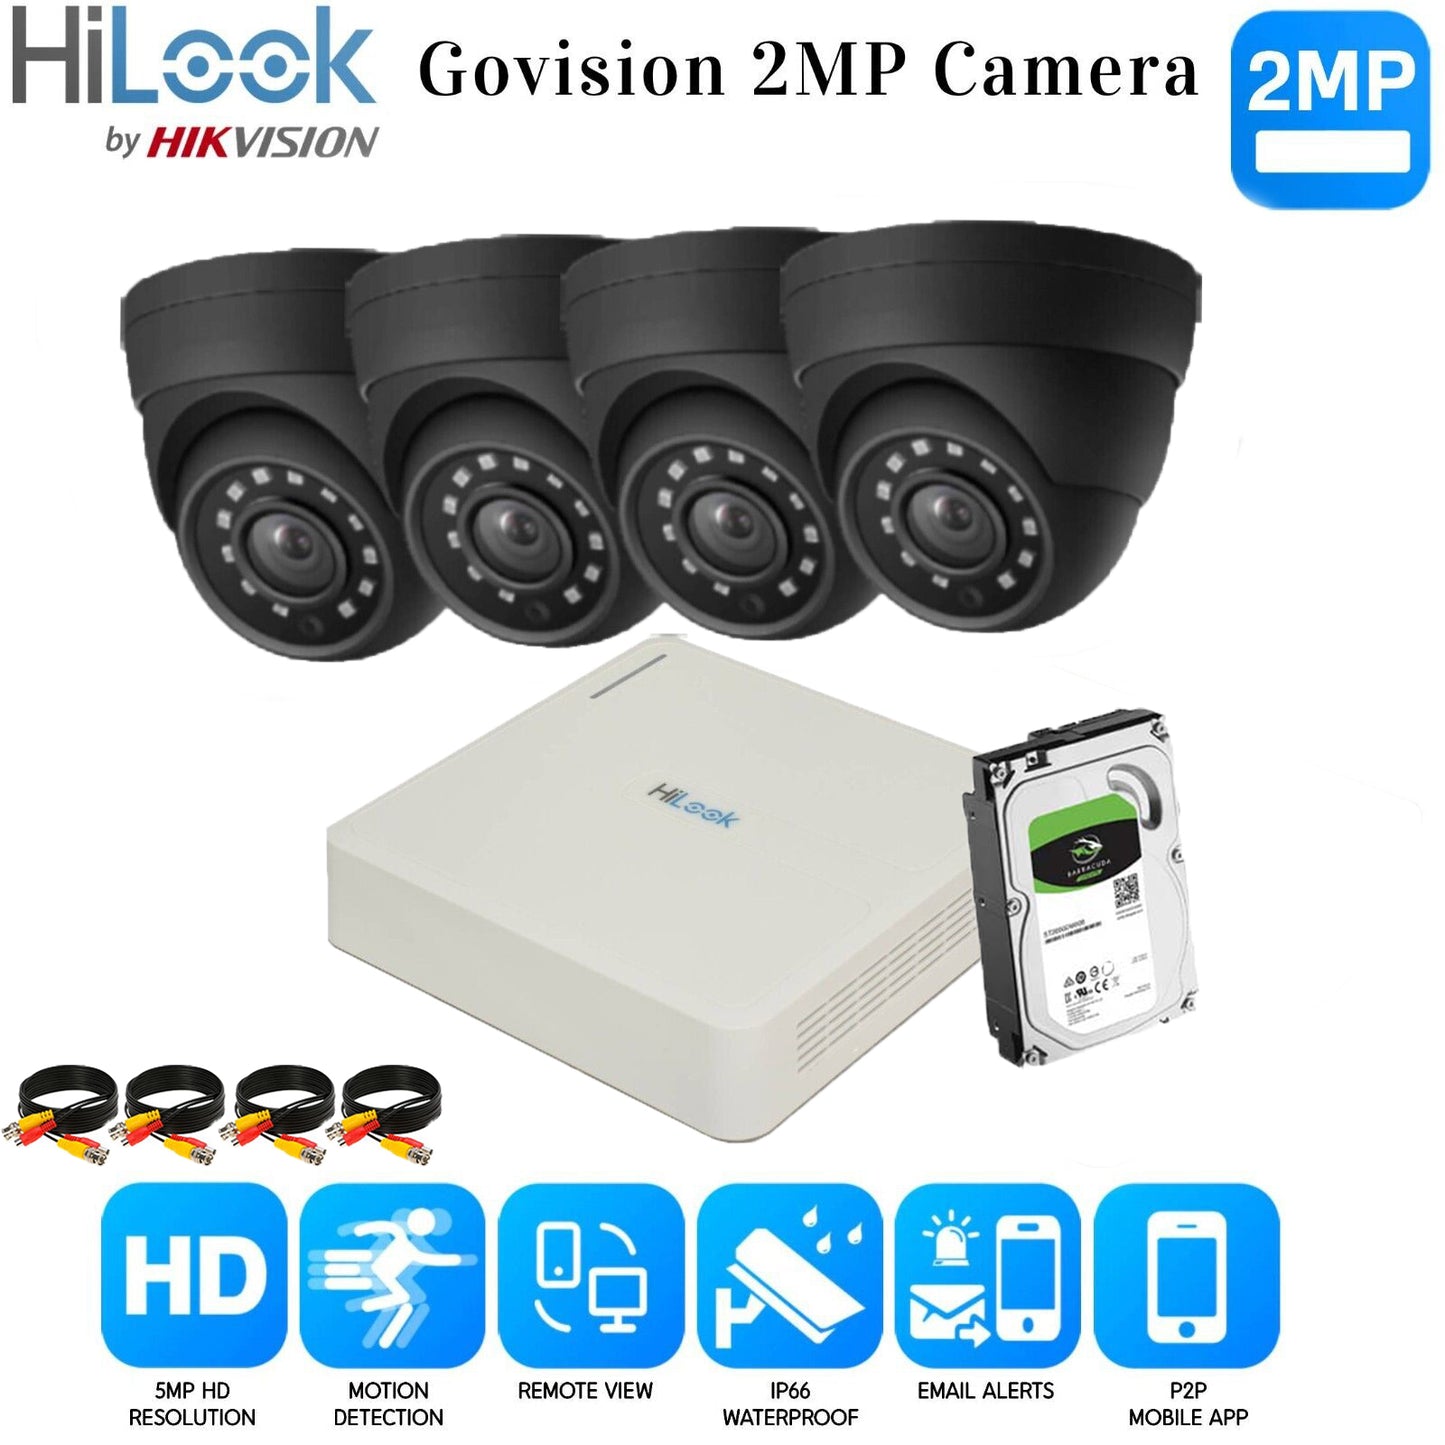 <img src="Hikvision Home Outdoor CCTV Security Camera System Kit HD 1080P 4CH DVR IR NIGHT 4CH DVR 4xCameras (gray) 1TB HDD.jpg" alt="Surveillance camera system ">